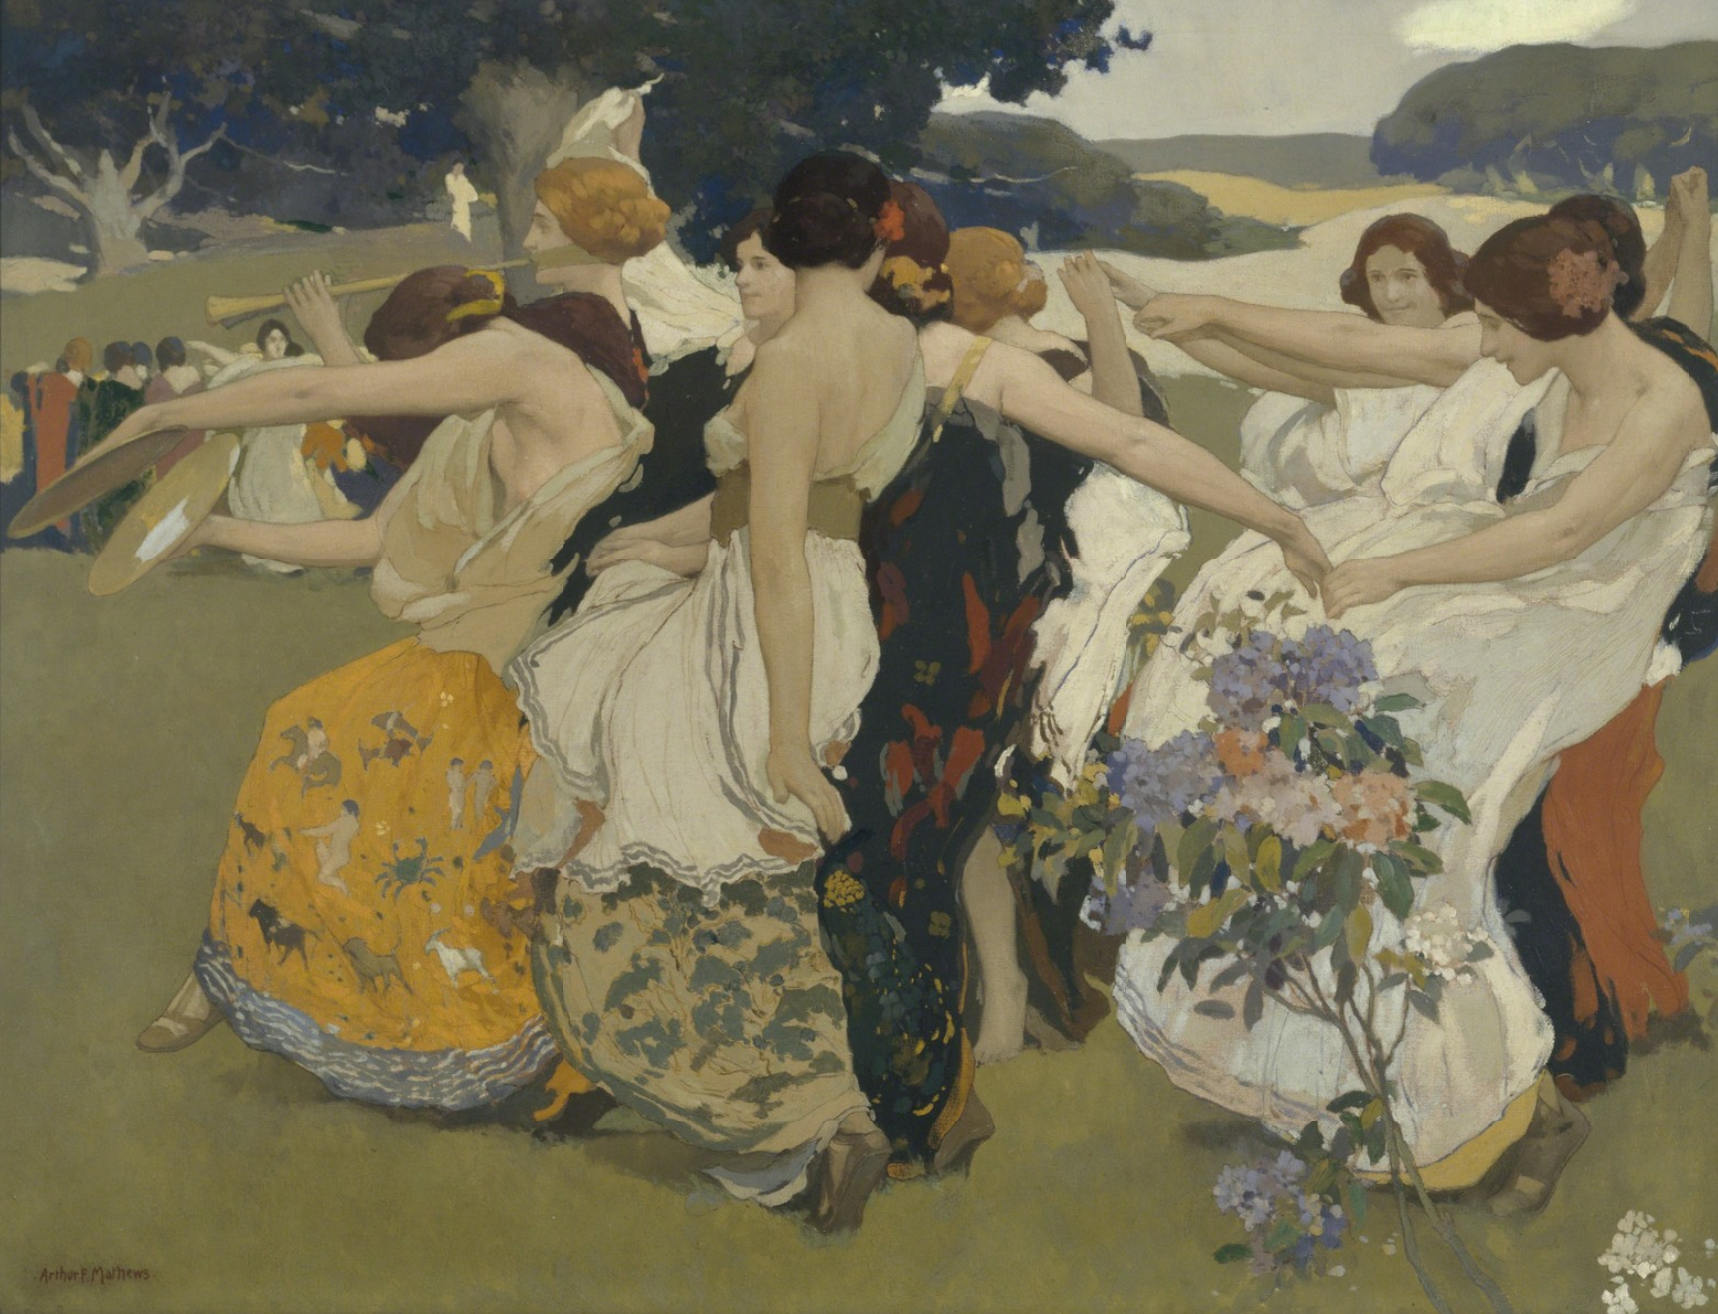 Giovinezza by Arthur F. Mathews - 1917 circa 